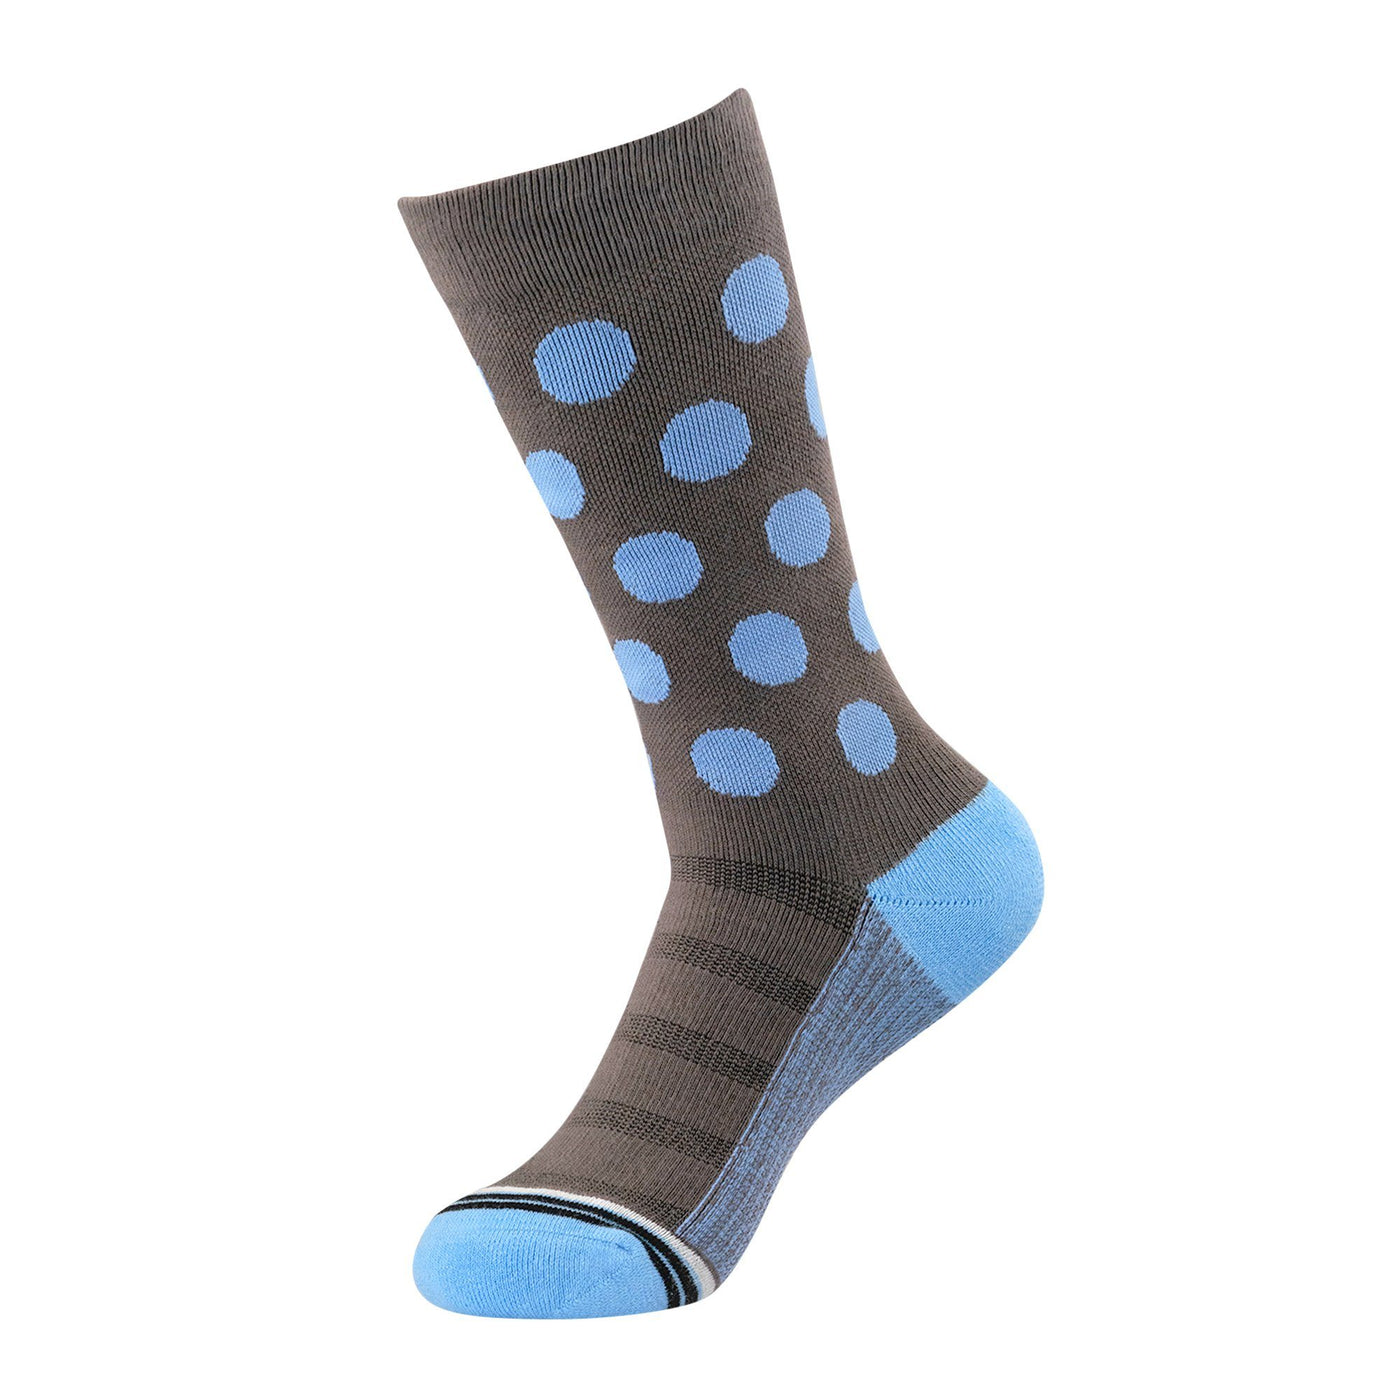 Light Blue Dots ArchTek Dress Sock dress socks ArchTek Women's Medium (sizes 8-10.5) Gray